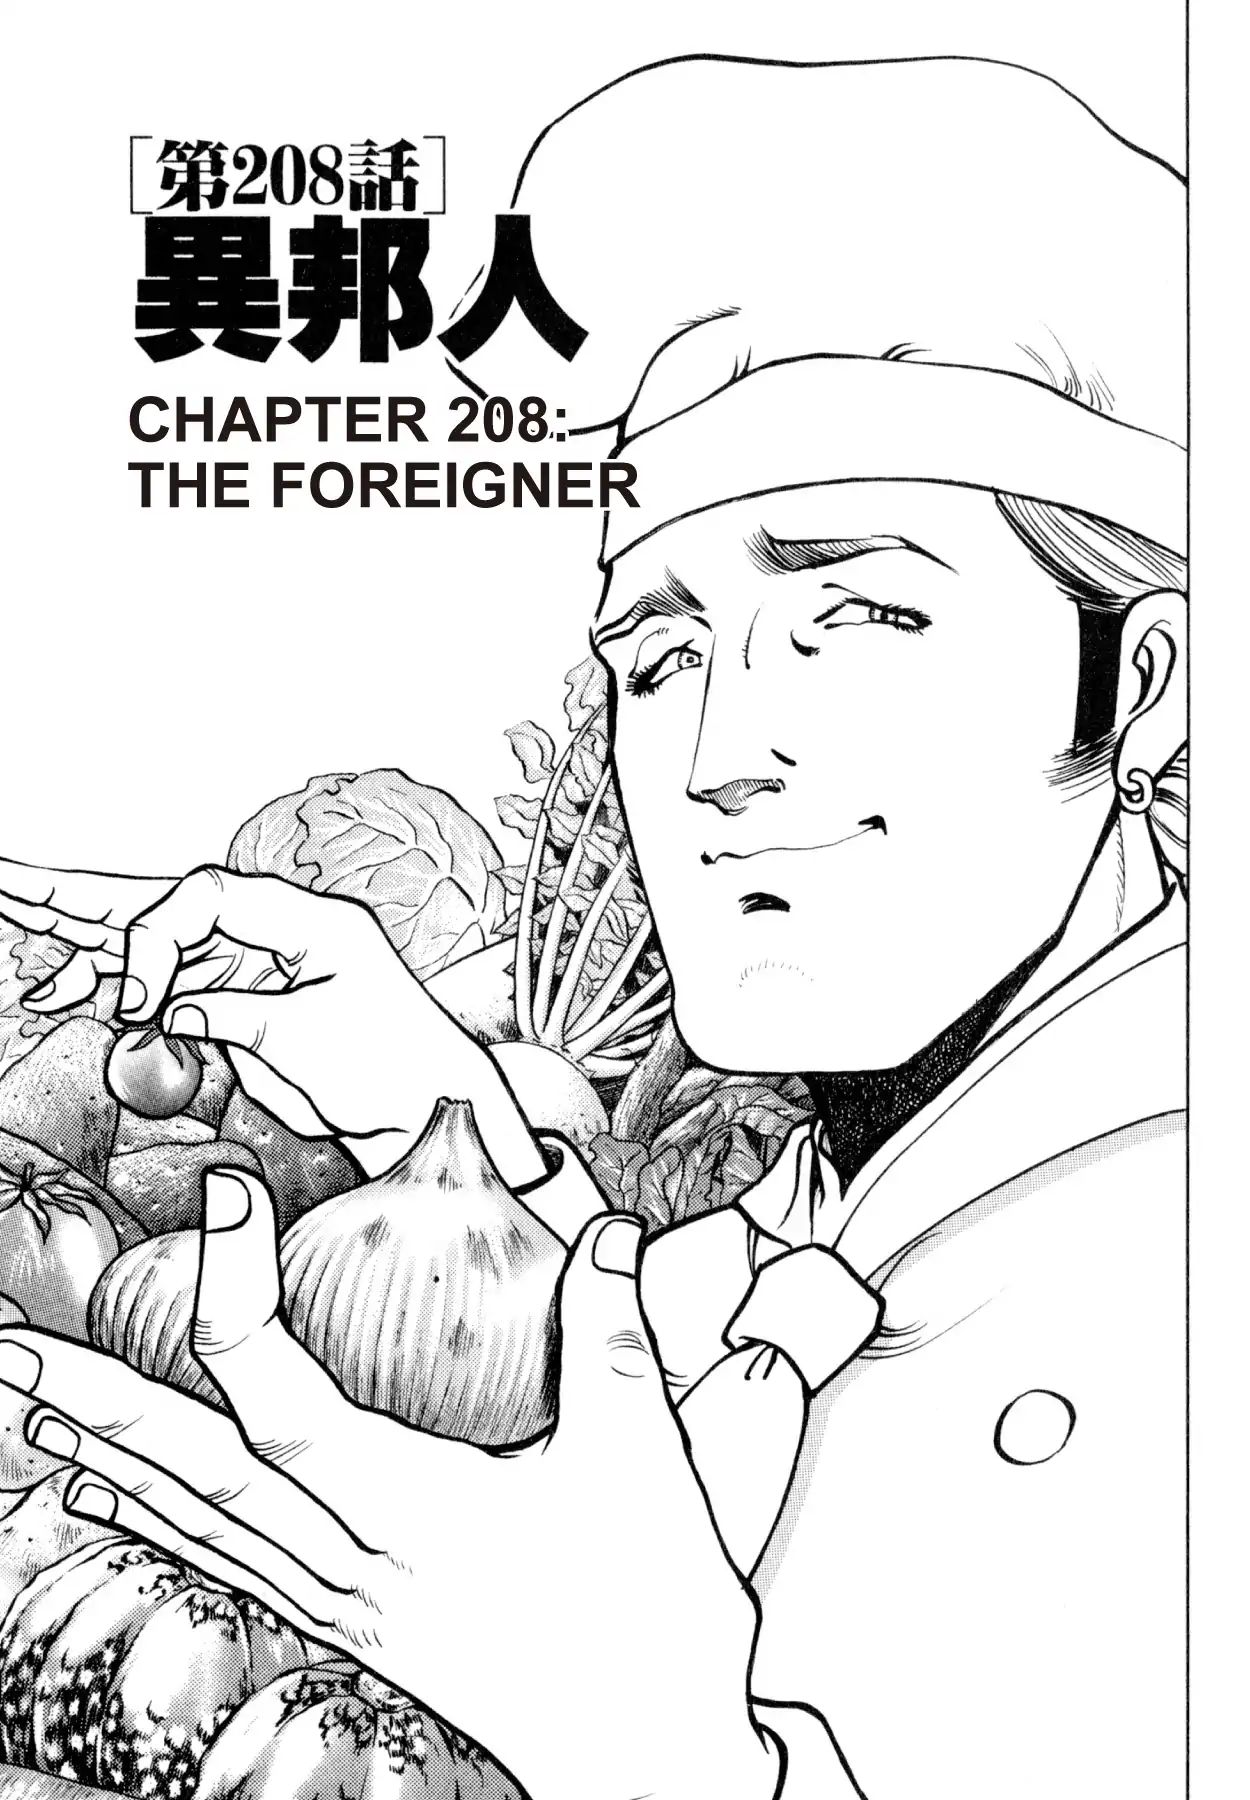 Shoku King VOL.23 CHAPTER 208: THE FOREIGNER